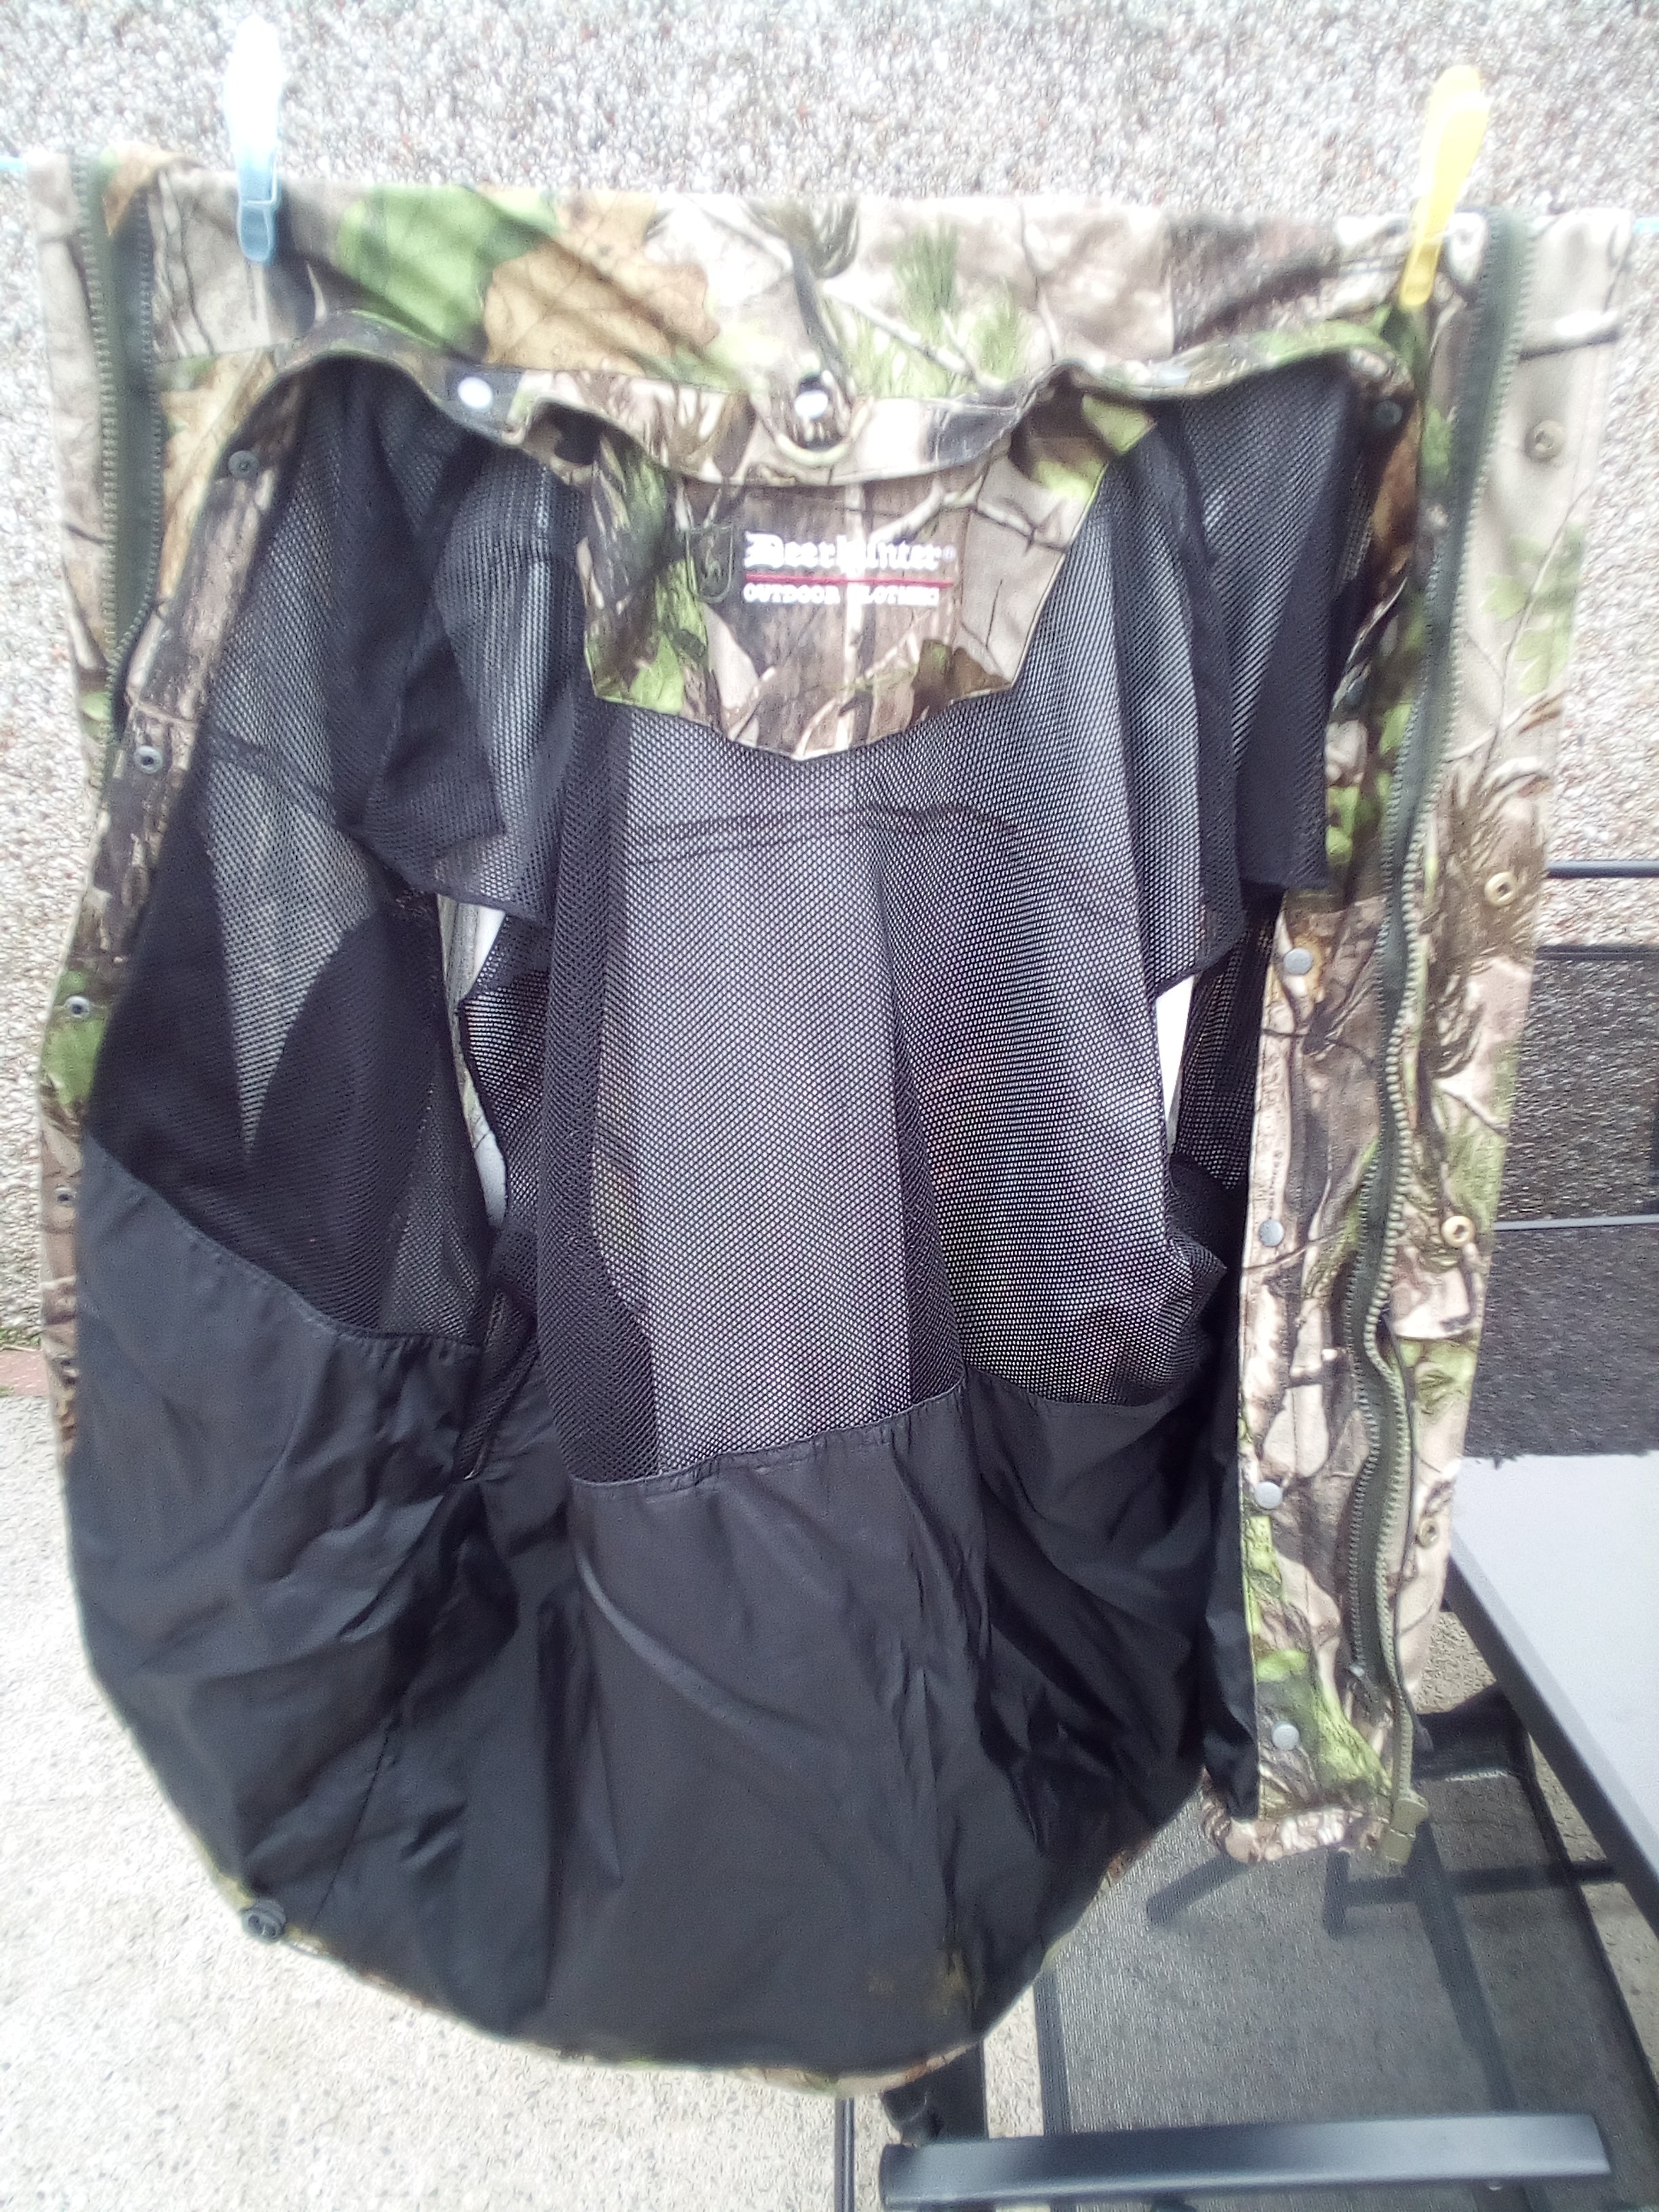 Deer hunter jacket and stormkloth pants